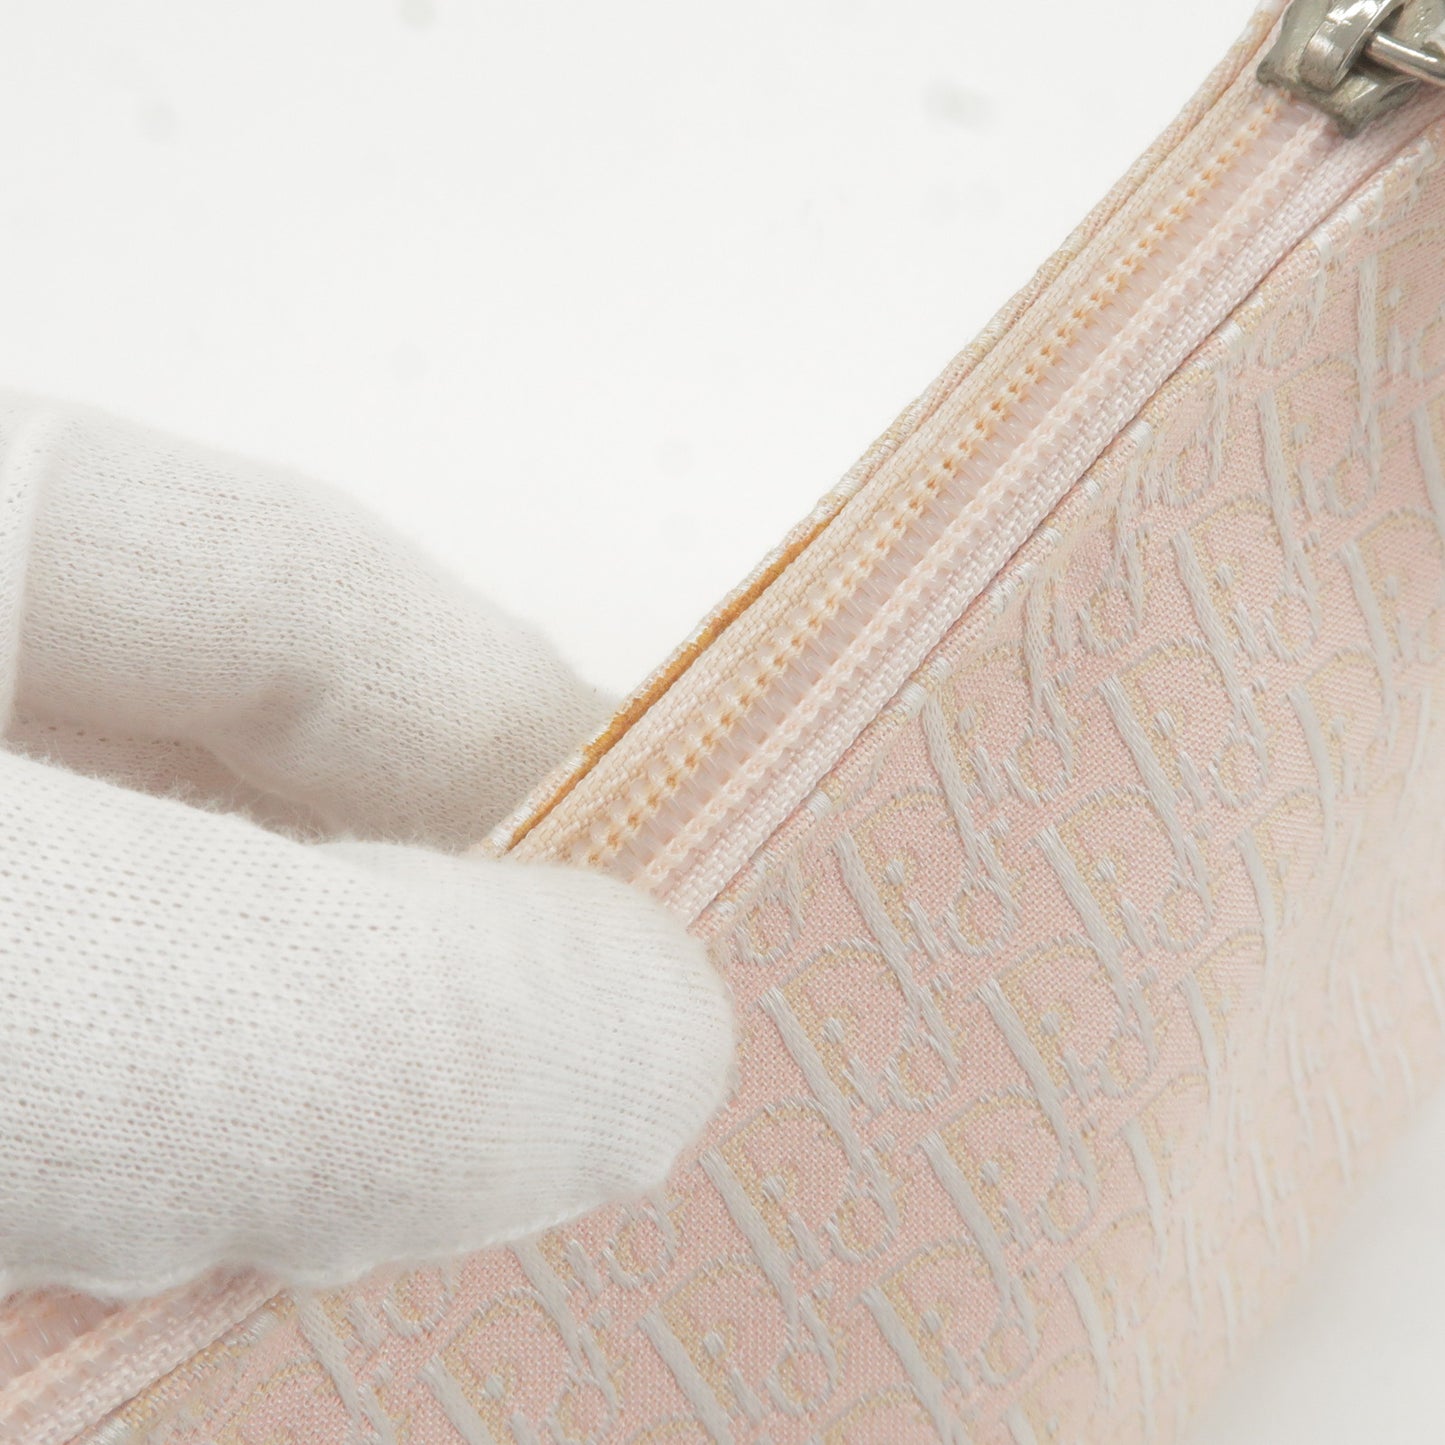 Christian Dior Trotter Canvas Shoulder Bag Pouch Pink White